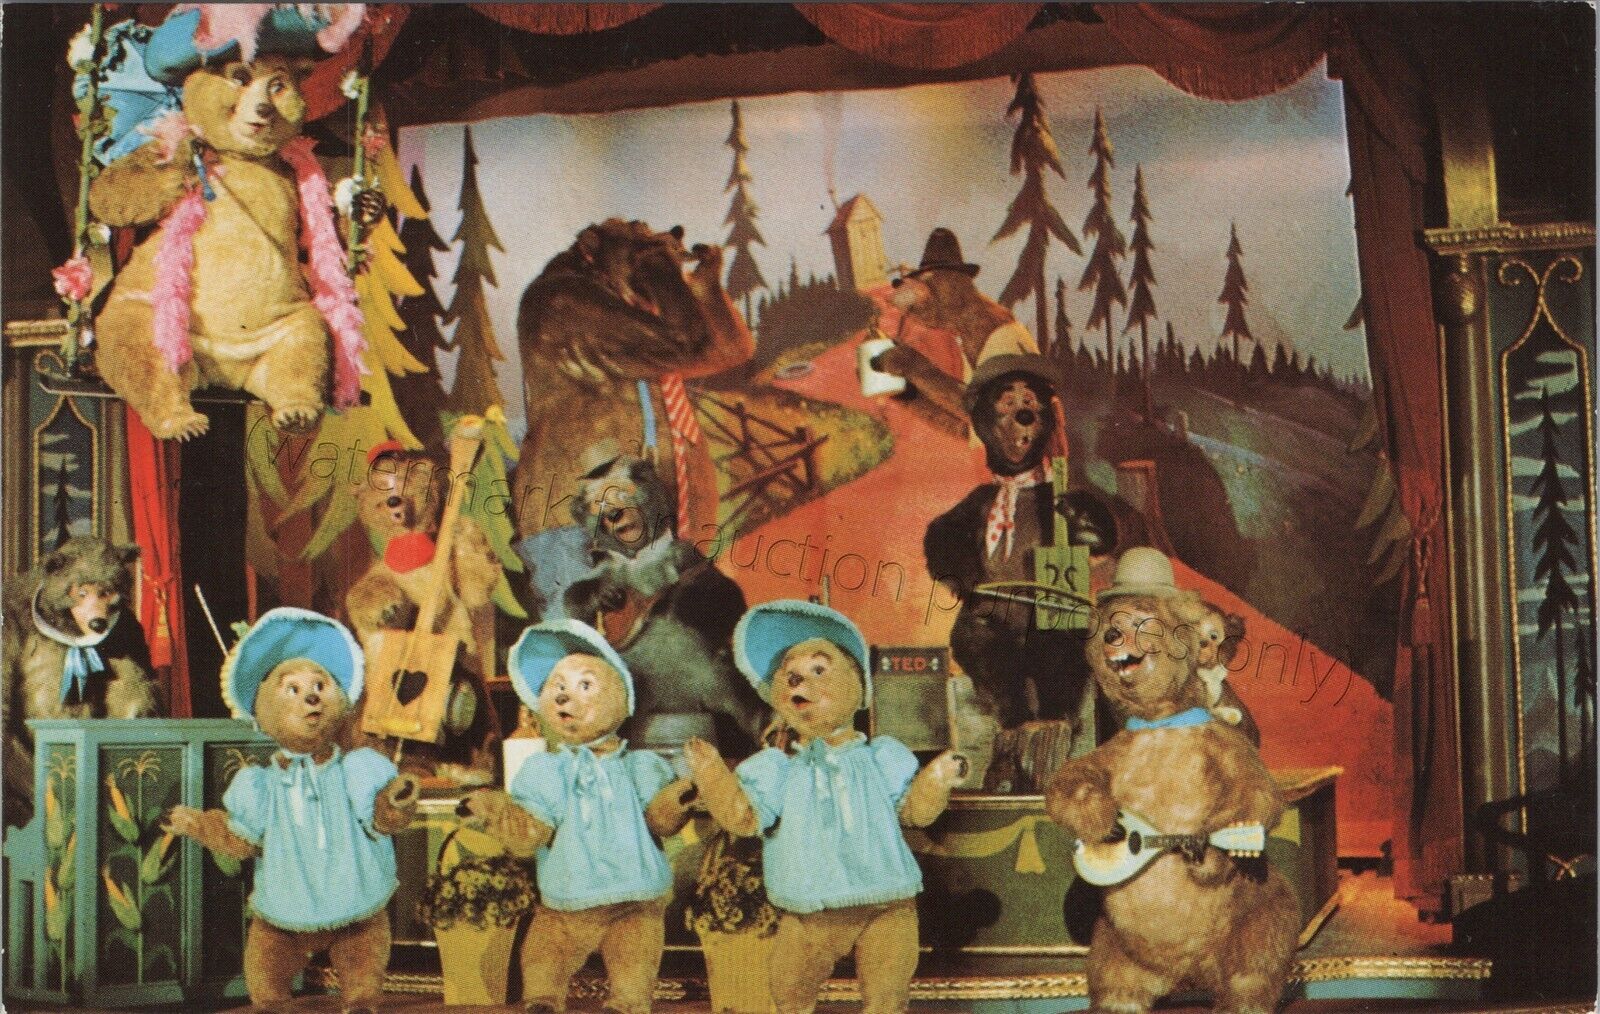 Orlando, FL: Walt Disney World, Country Bear Jamboree Vintage Florida Postcard